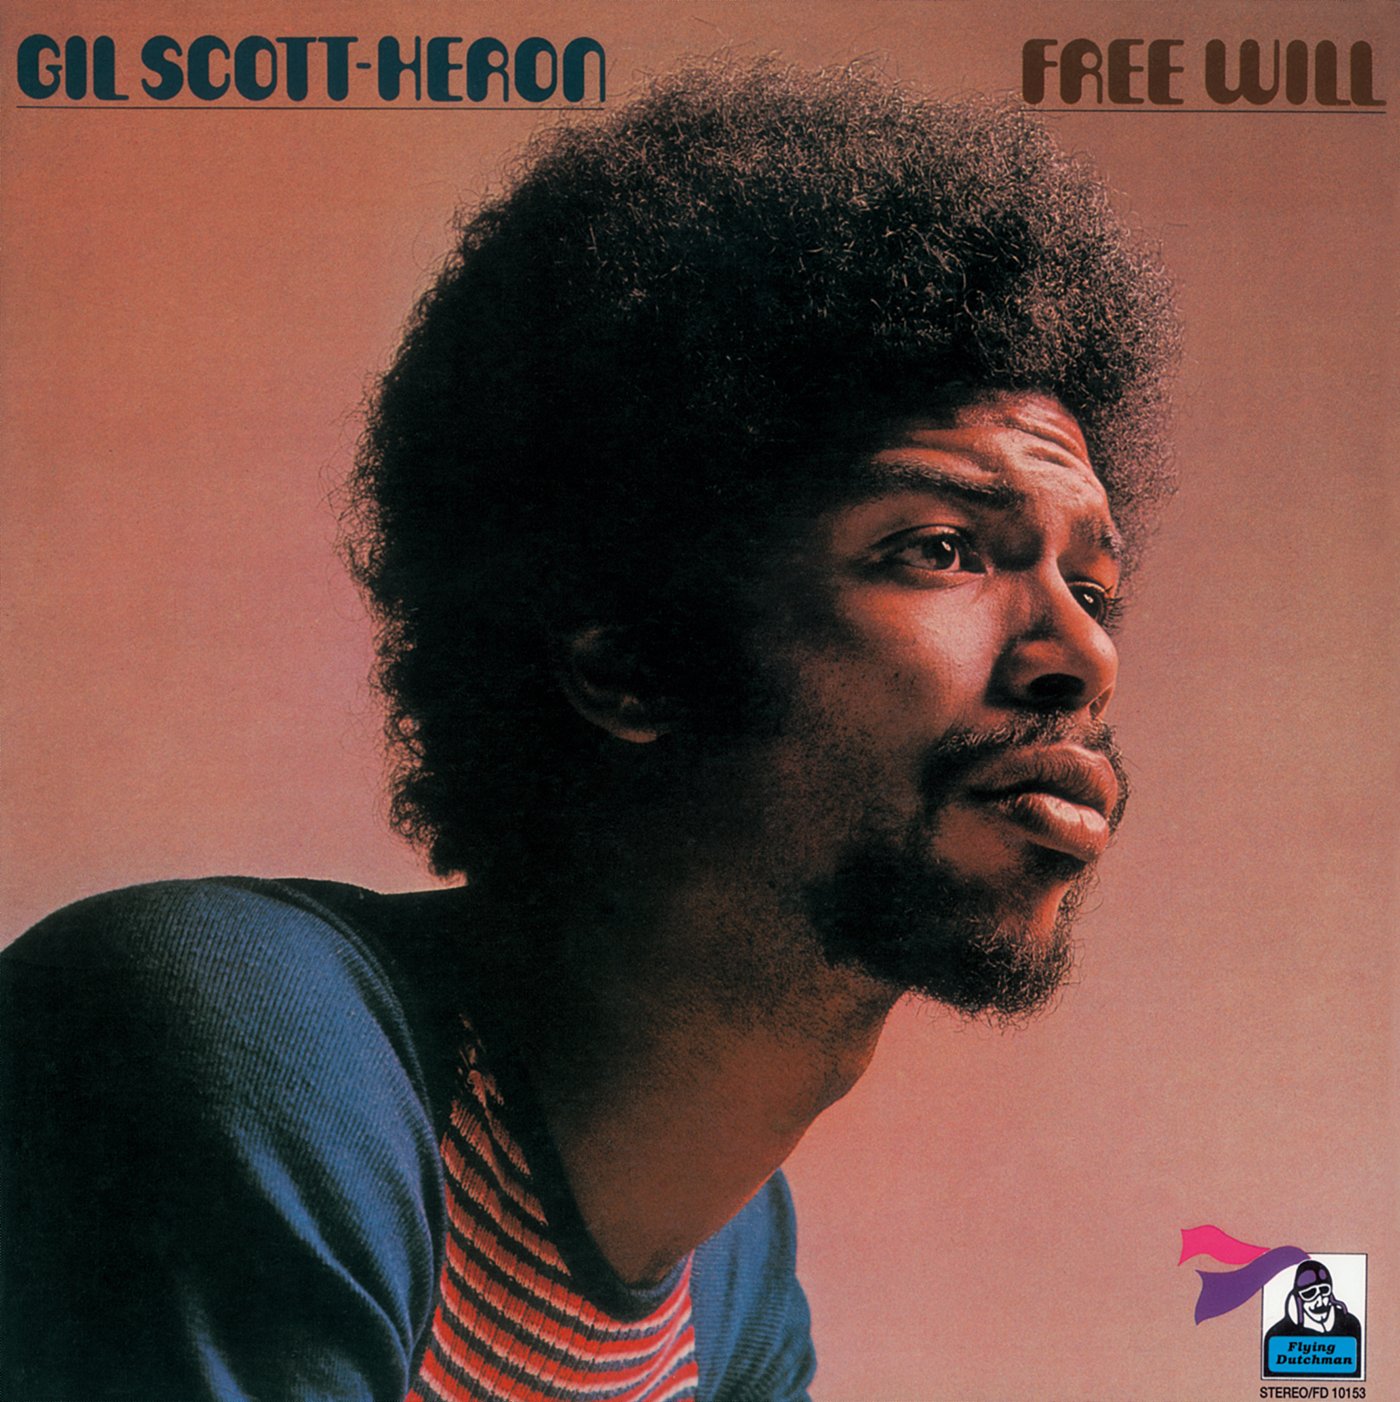 Gil Scott-Heron "Free Will" LP